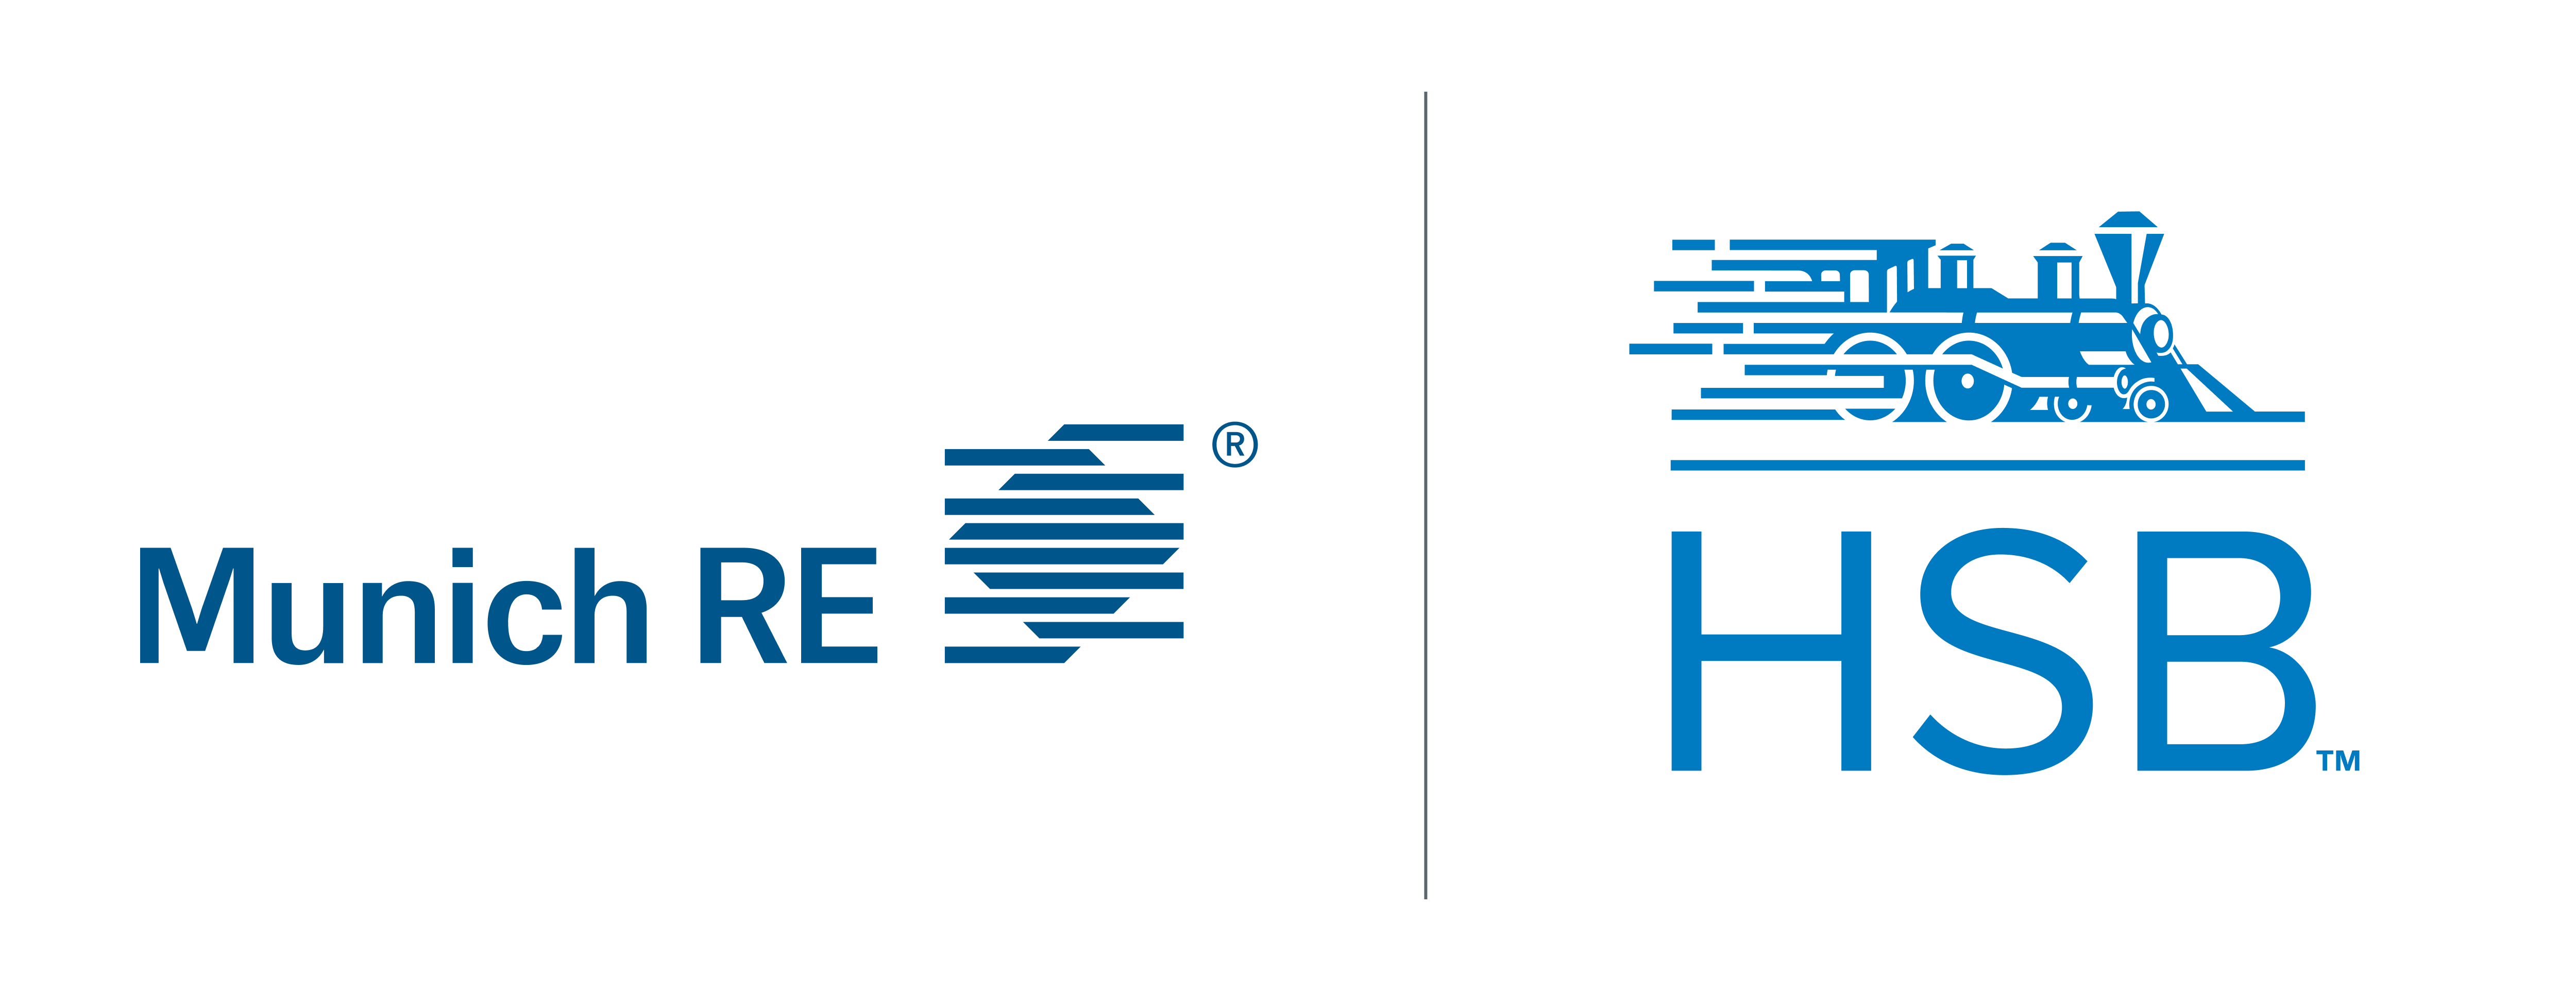 Munich Re and HSB logos